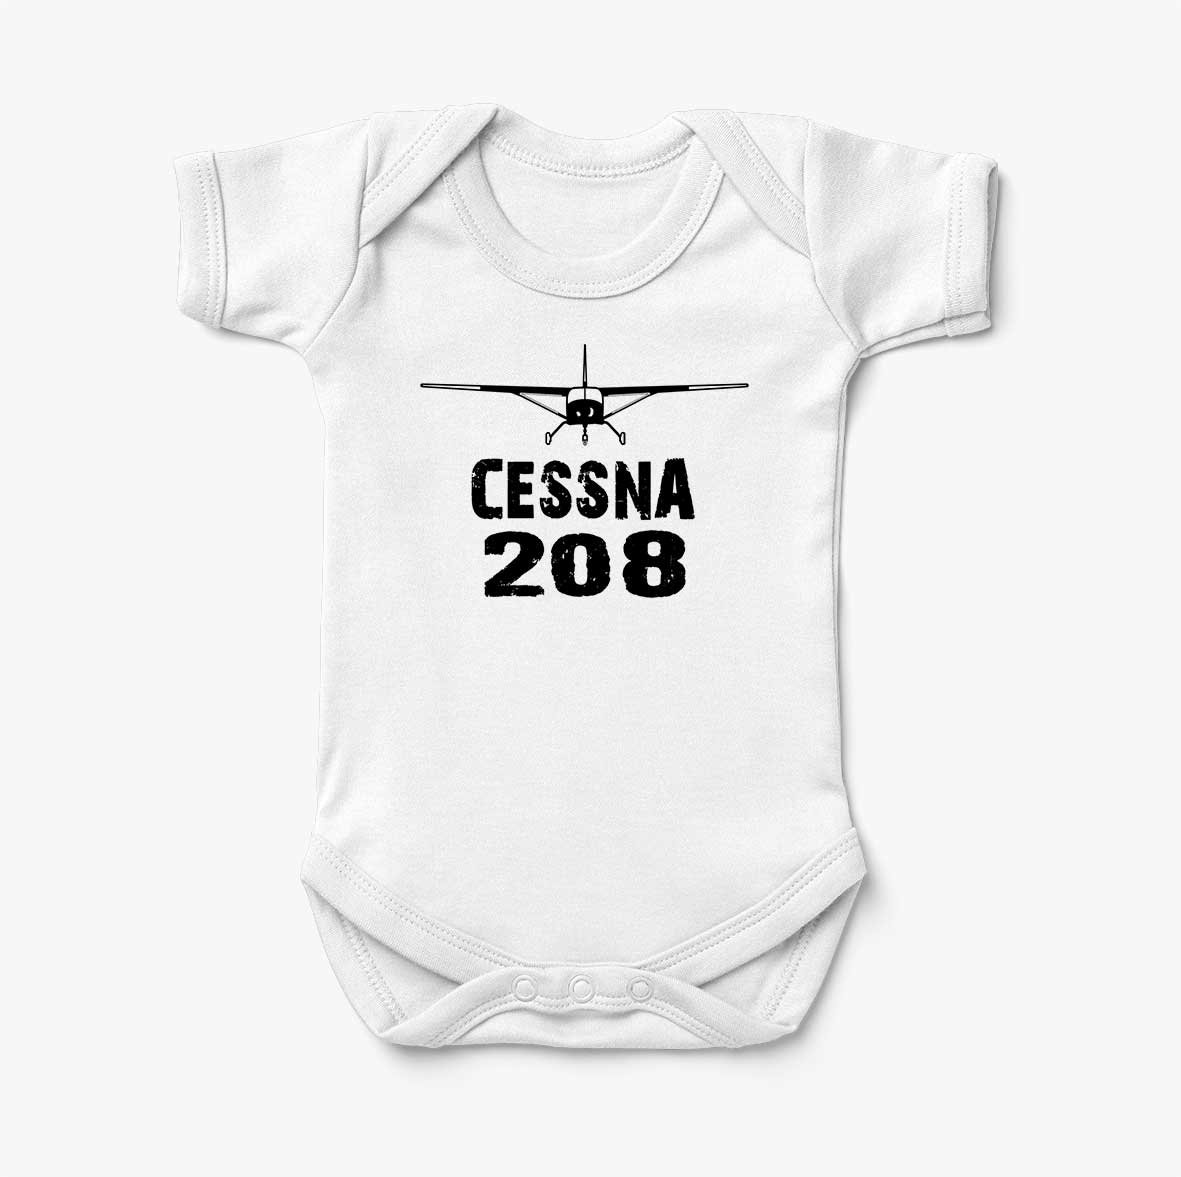 Cessna 208 & Plane Designed Baby Bodysuits